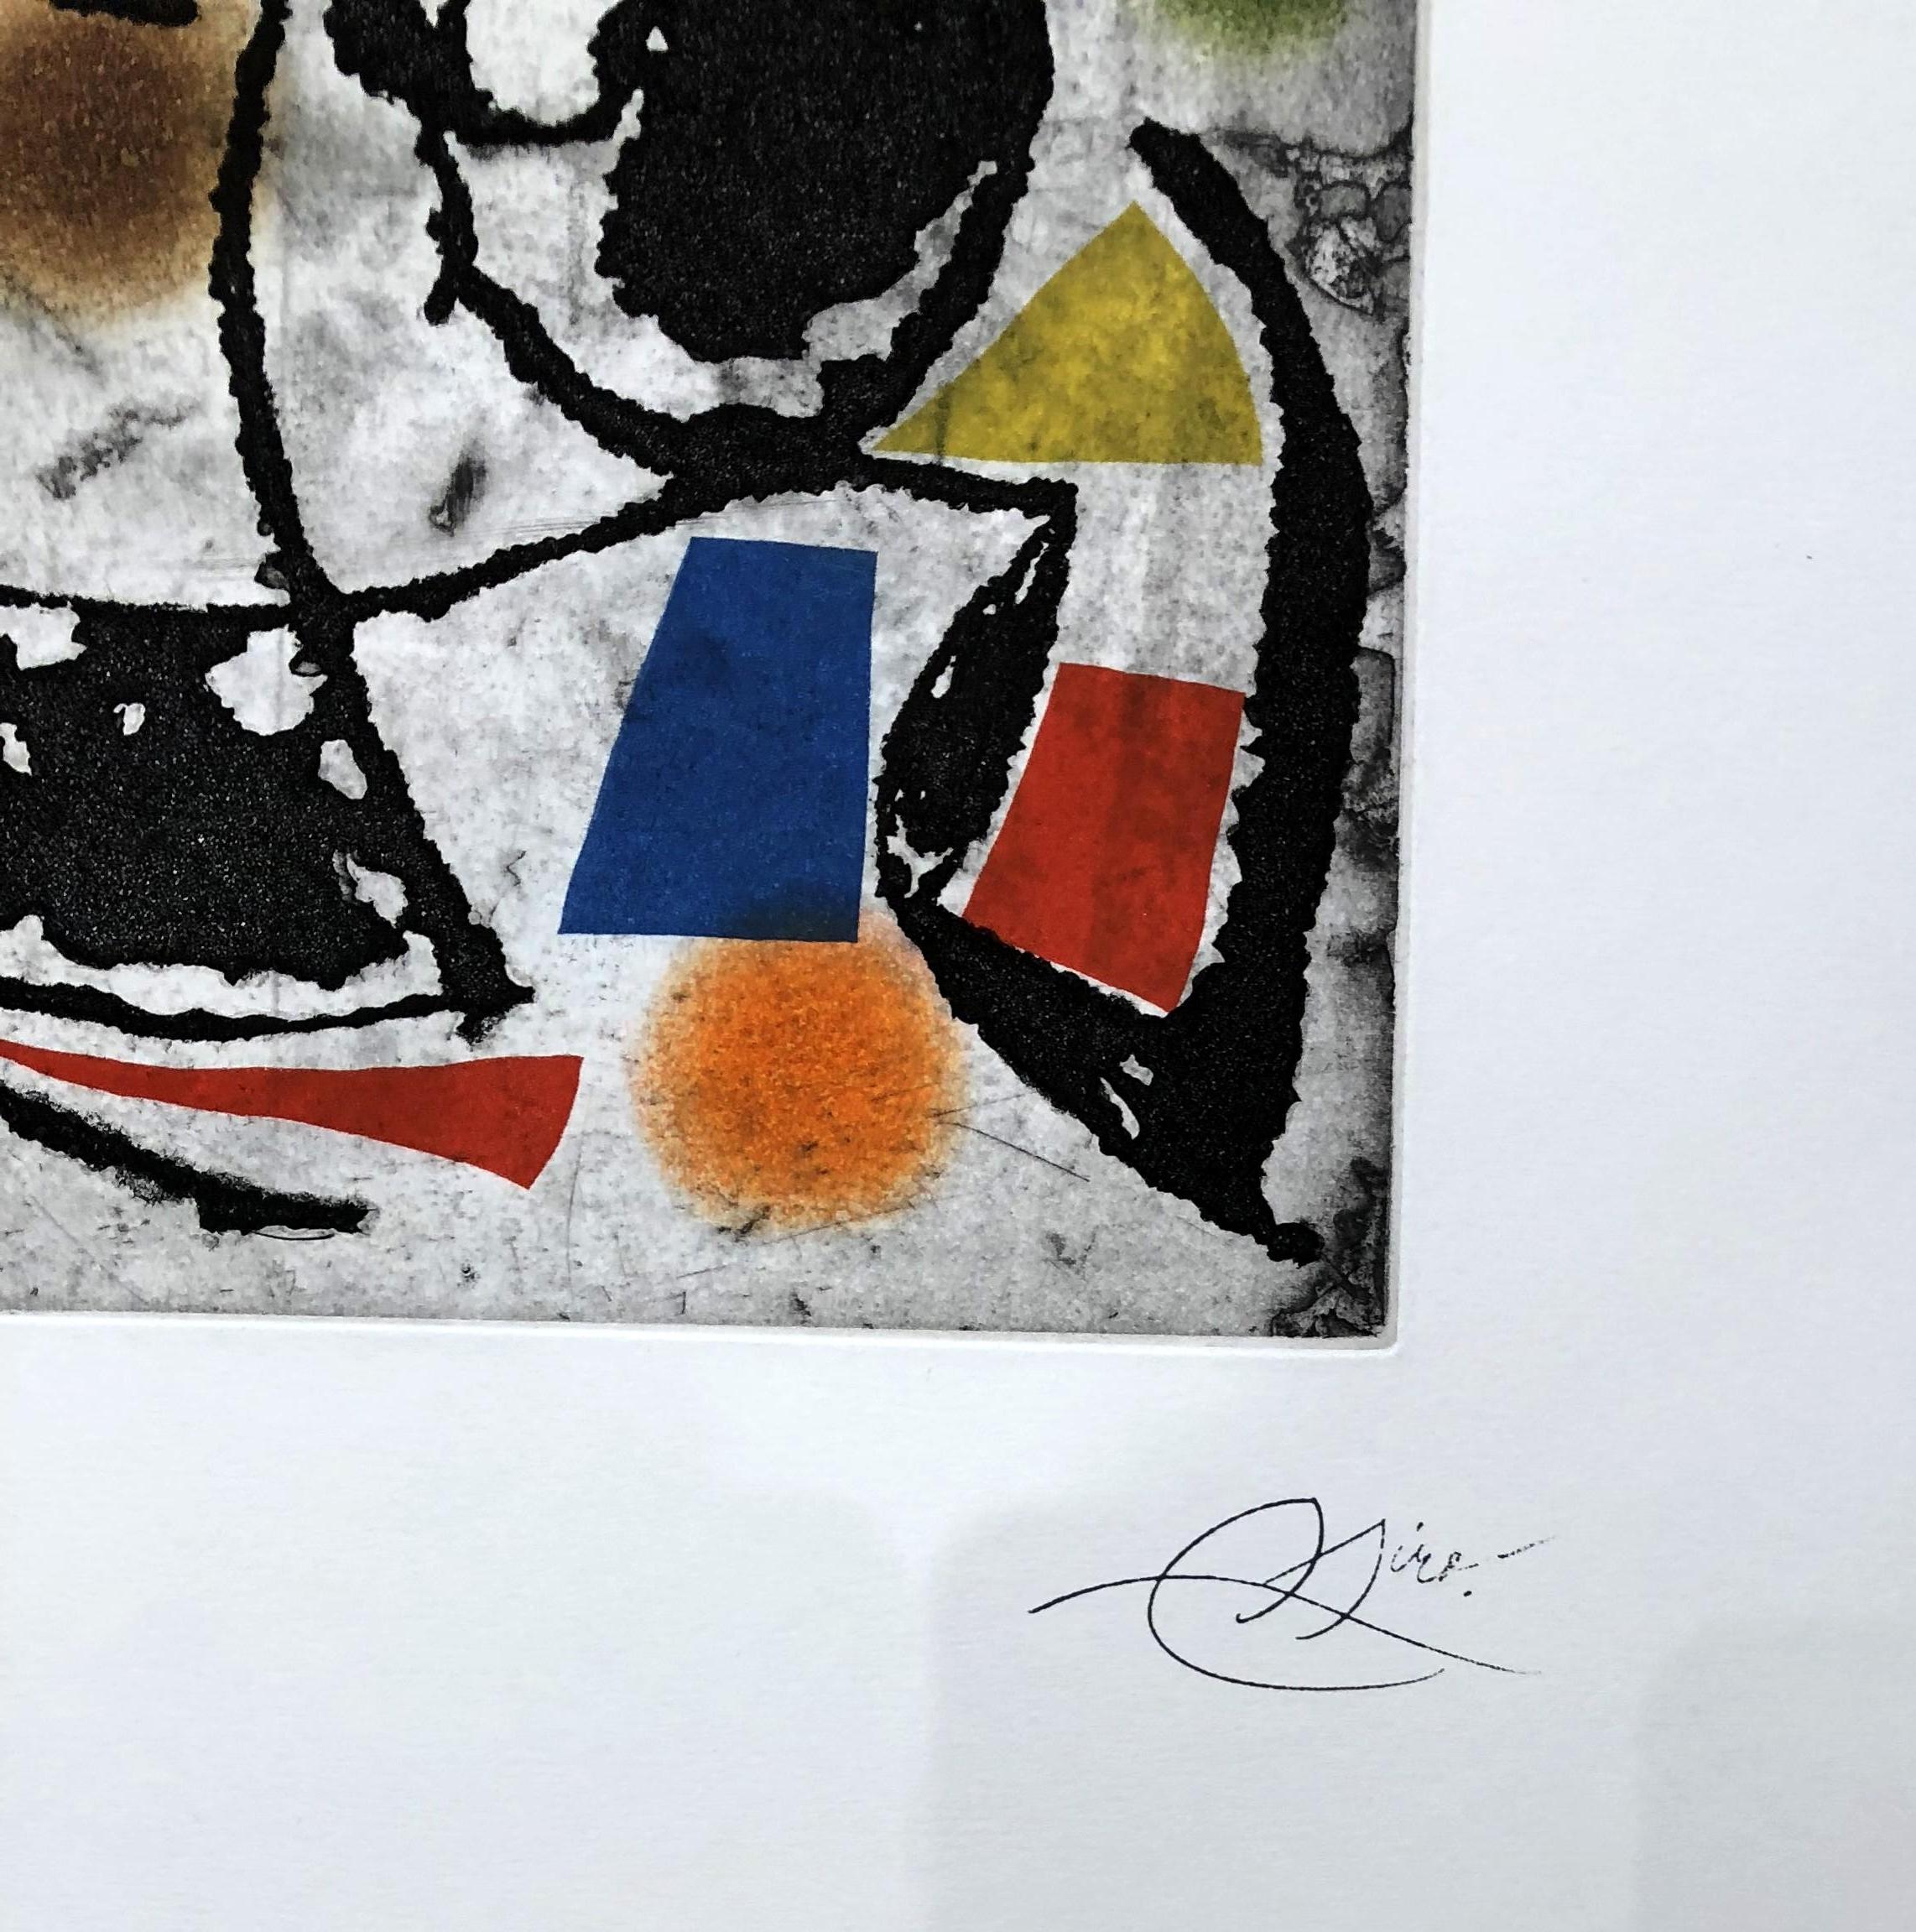 Les Montagnards - Original Etching - 50 copies - Print by Joan Miró